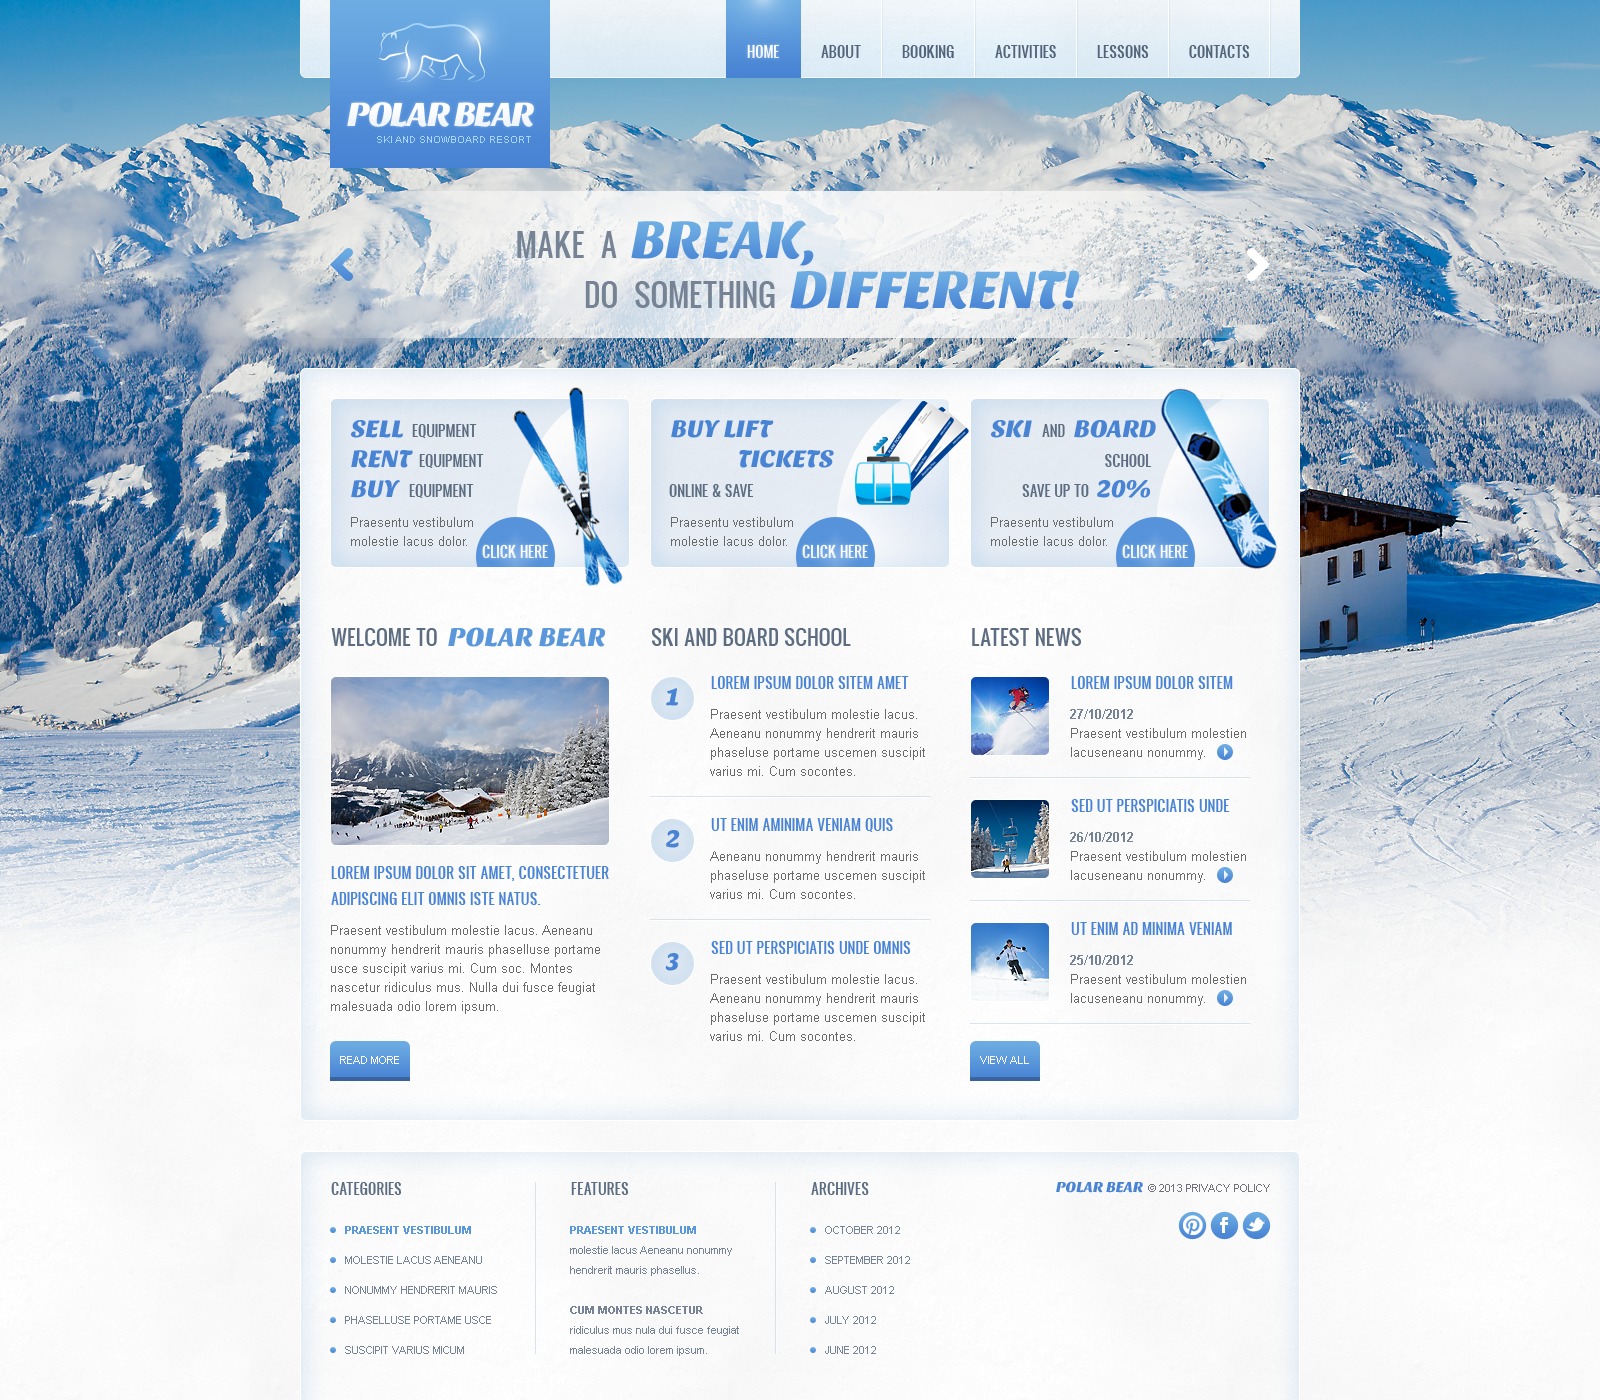 Skiing Website Template